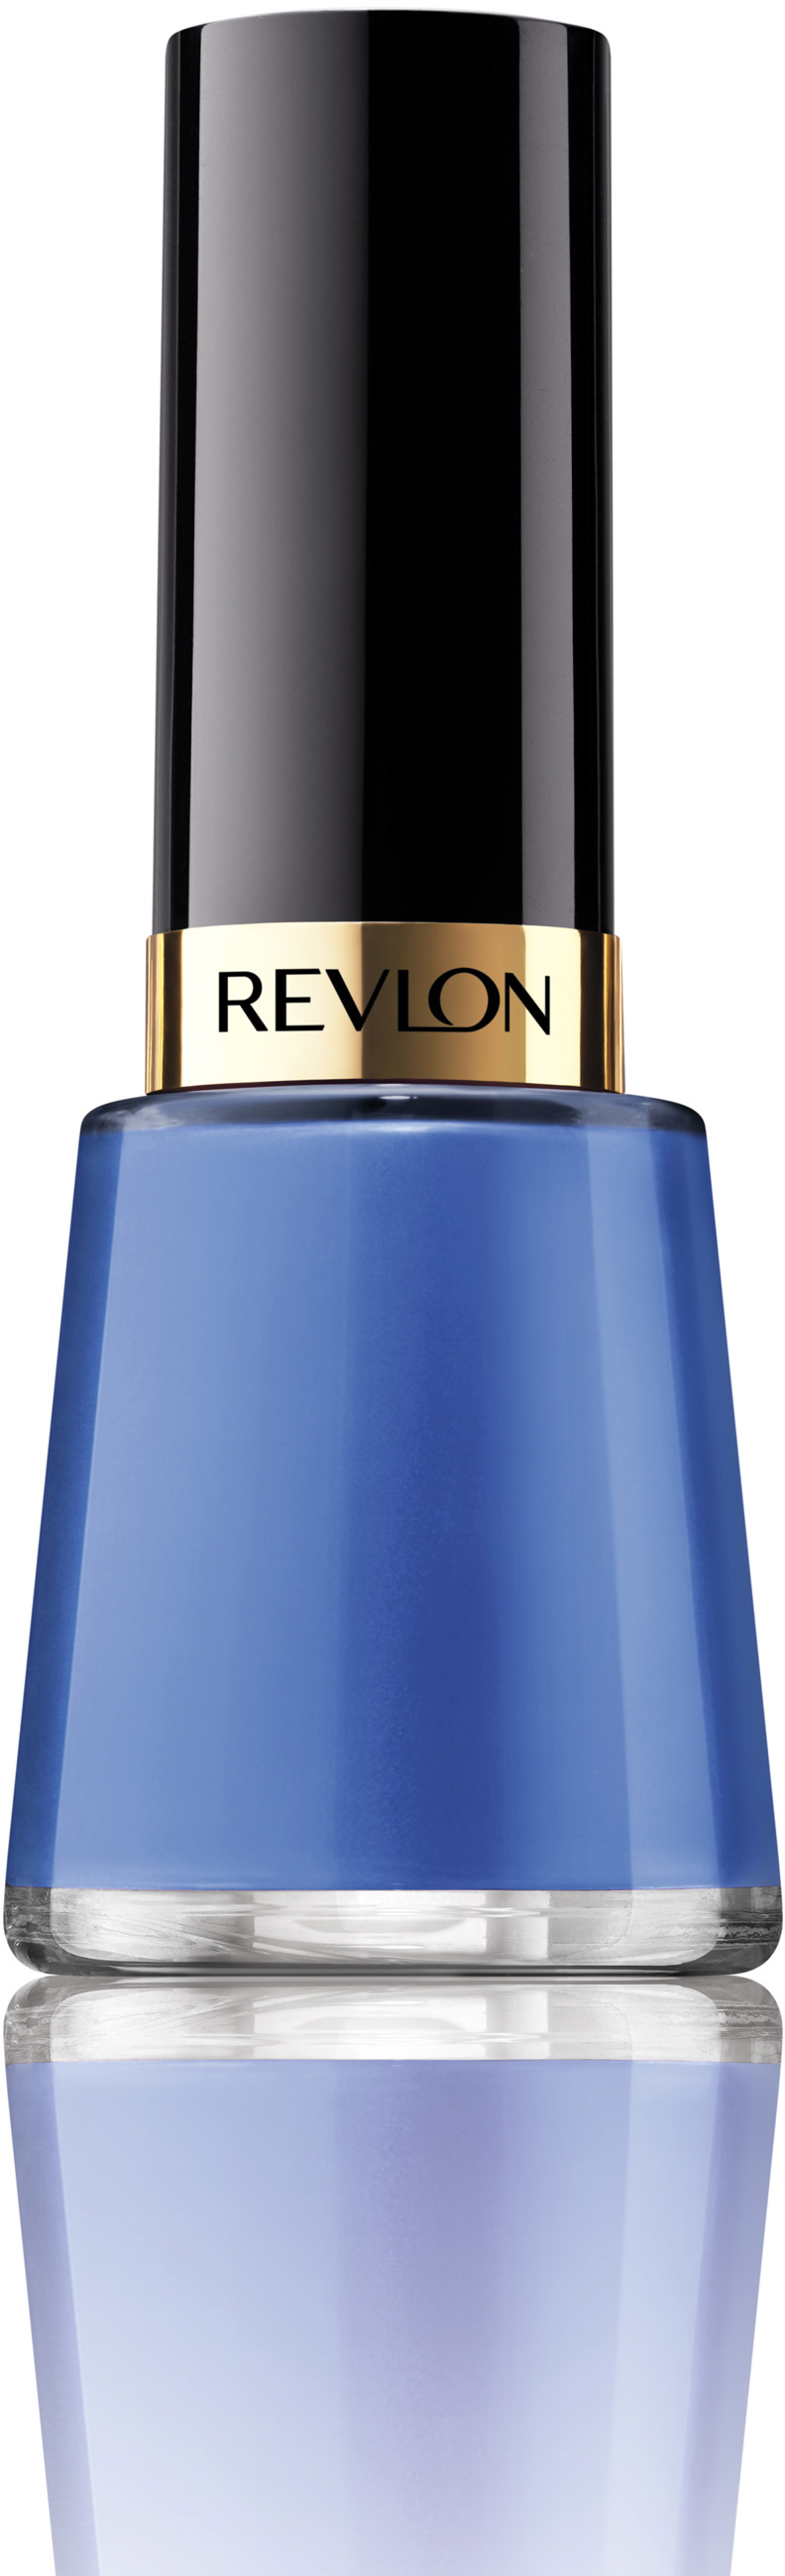 Revlon Cosmetics Nail Enamel 733